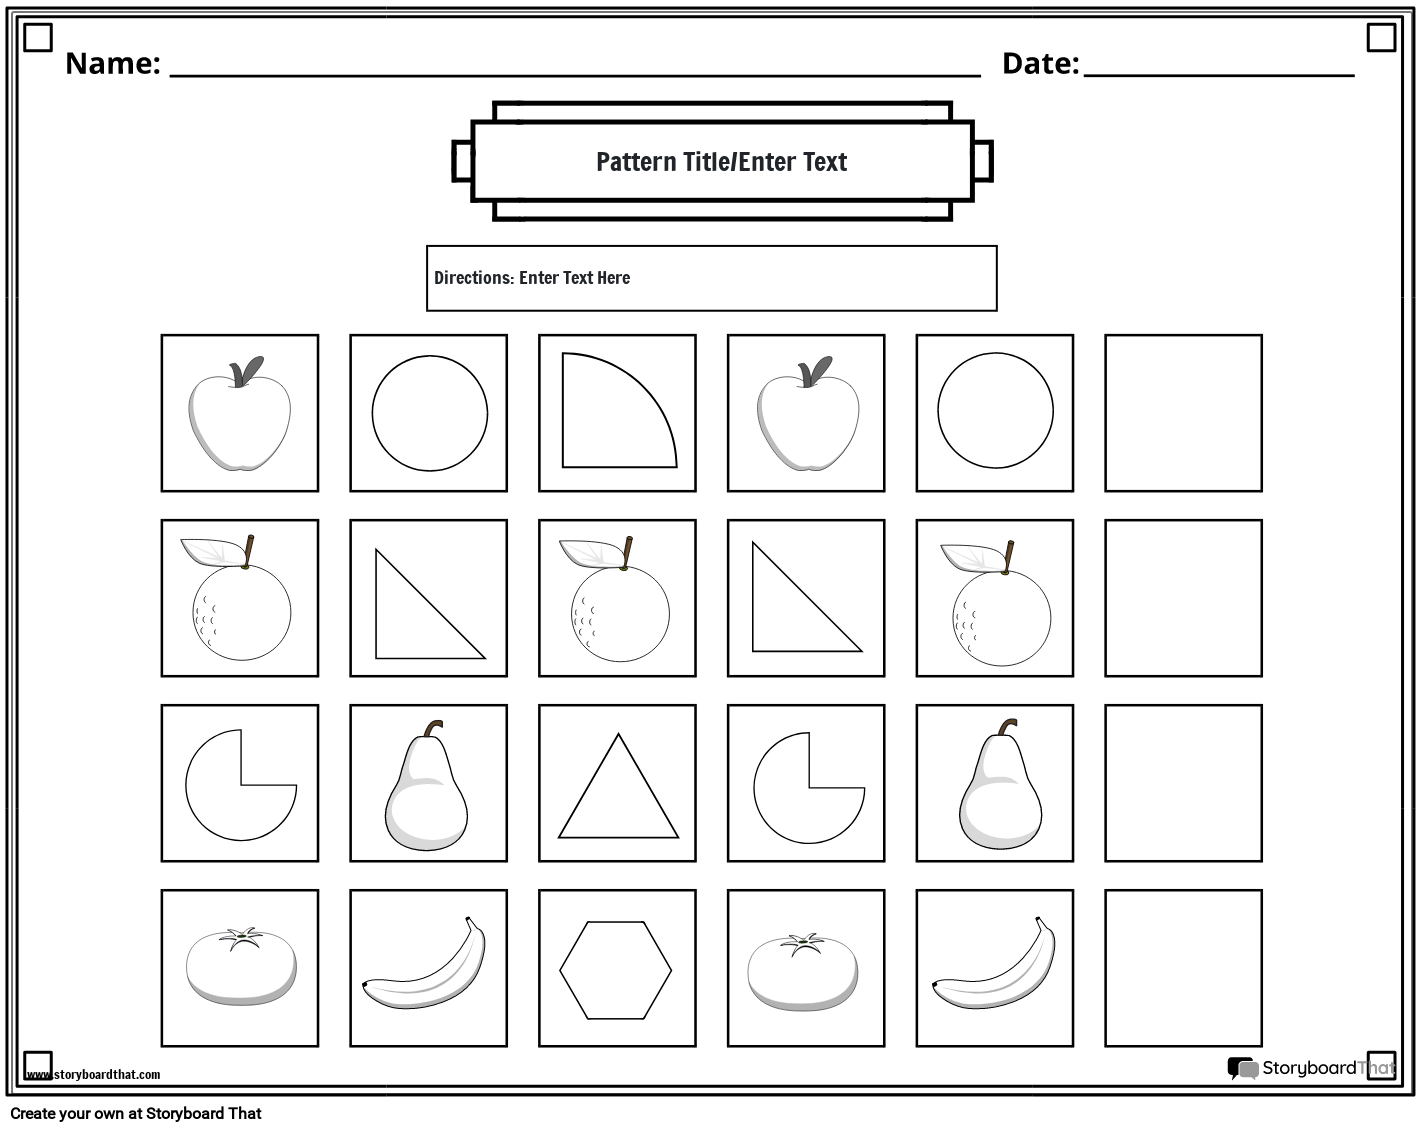 Fruits & shapes pattern worksheet (black & white)